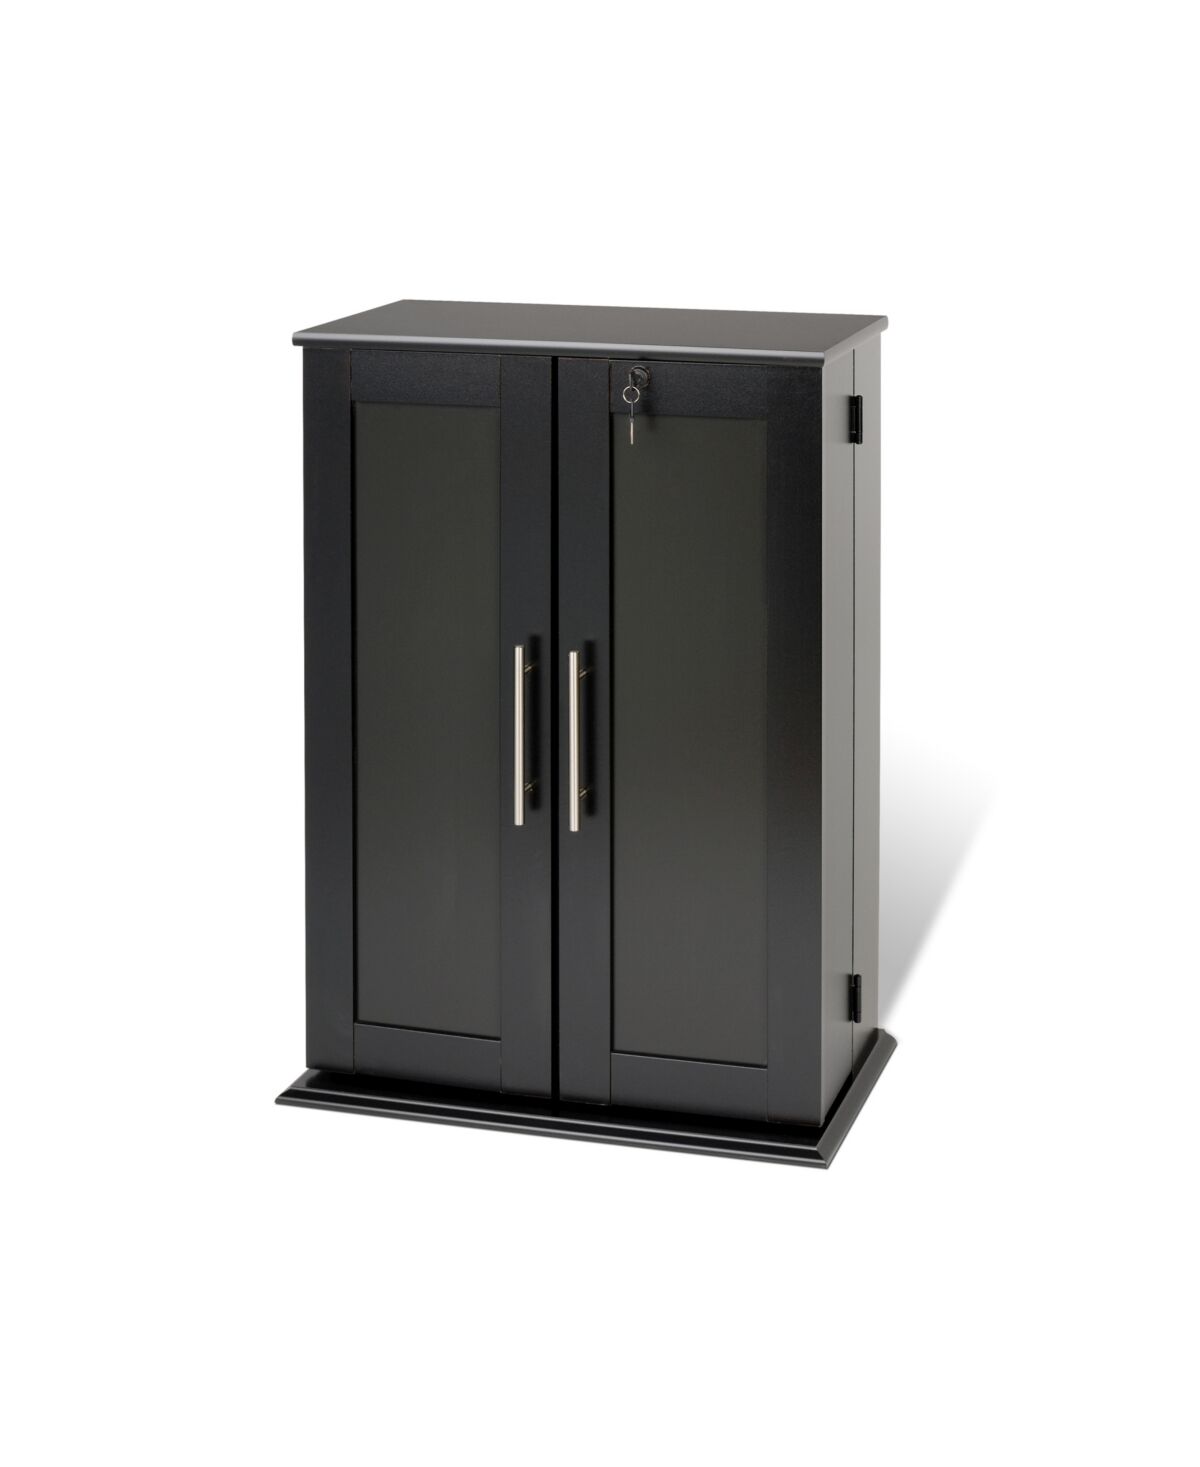 Prepac Locking Media Storage Cabinet with Shaker Doors - Black